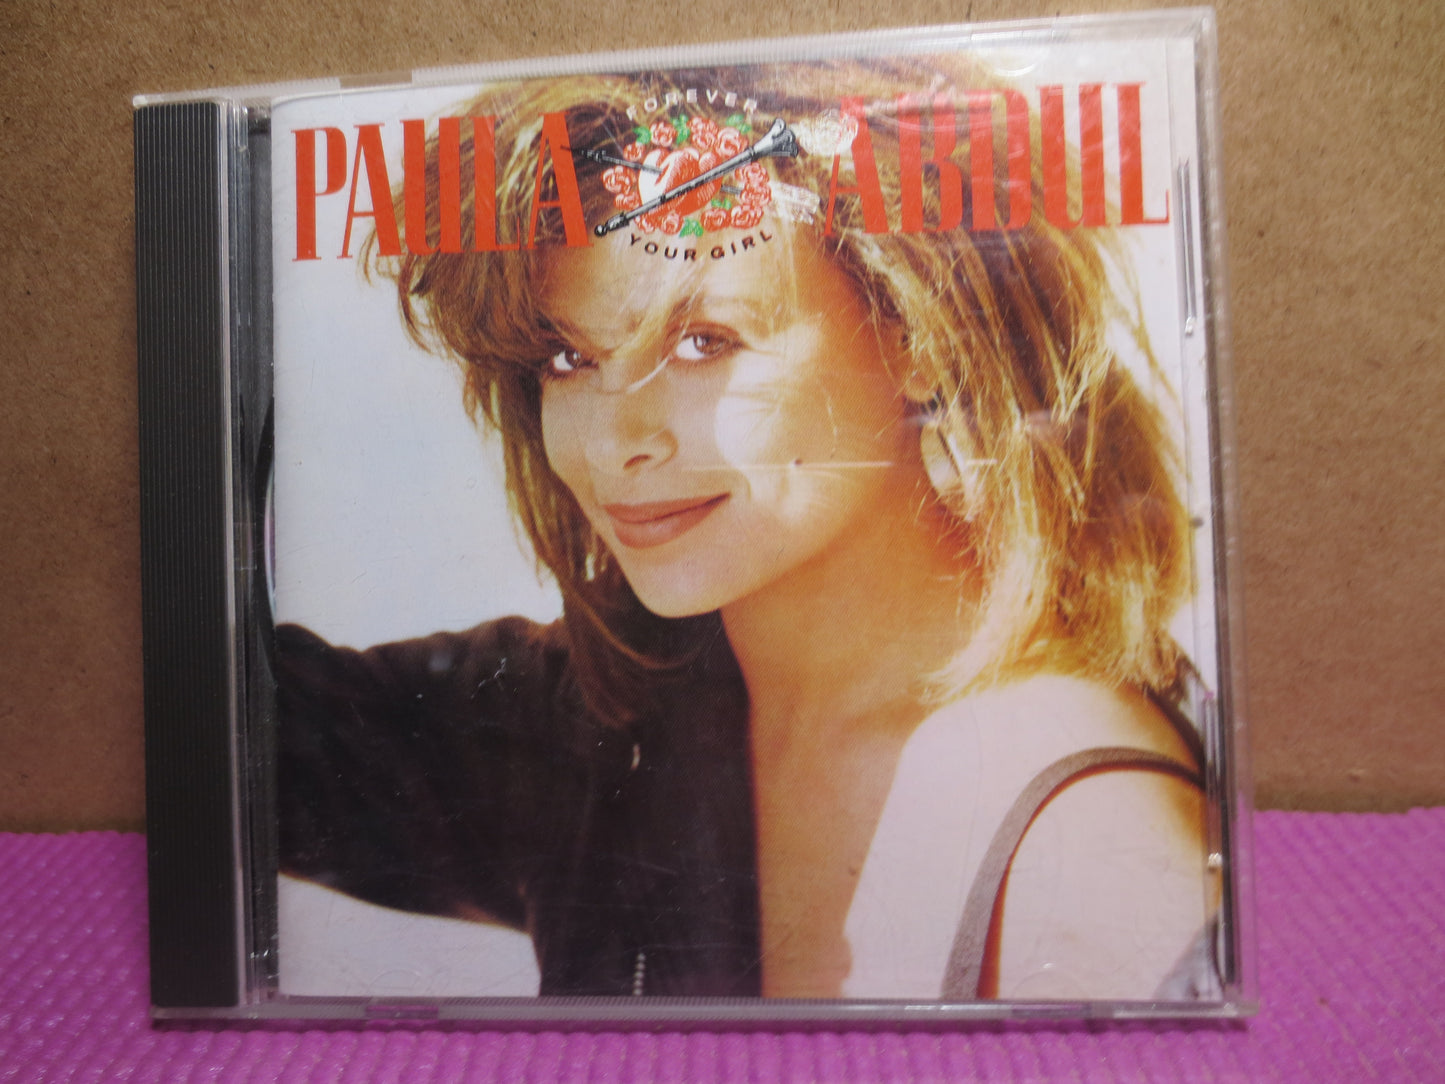 PAULA ABDUL, Forever Your Girl, Paula Abdul Cds, Paula Abdul Albums, Paula Abdul Lps, Paula Abdul Songs, 1988 Compact Discs